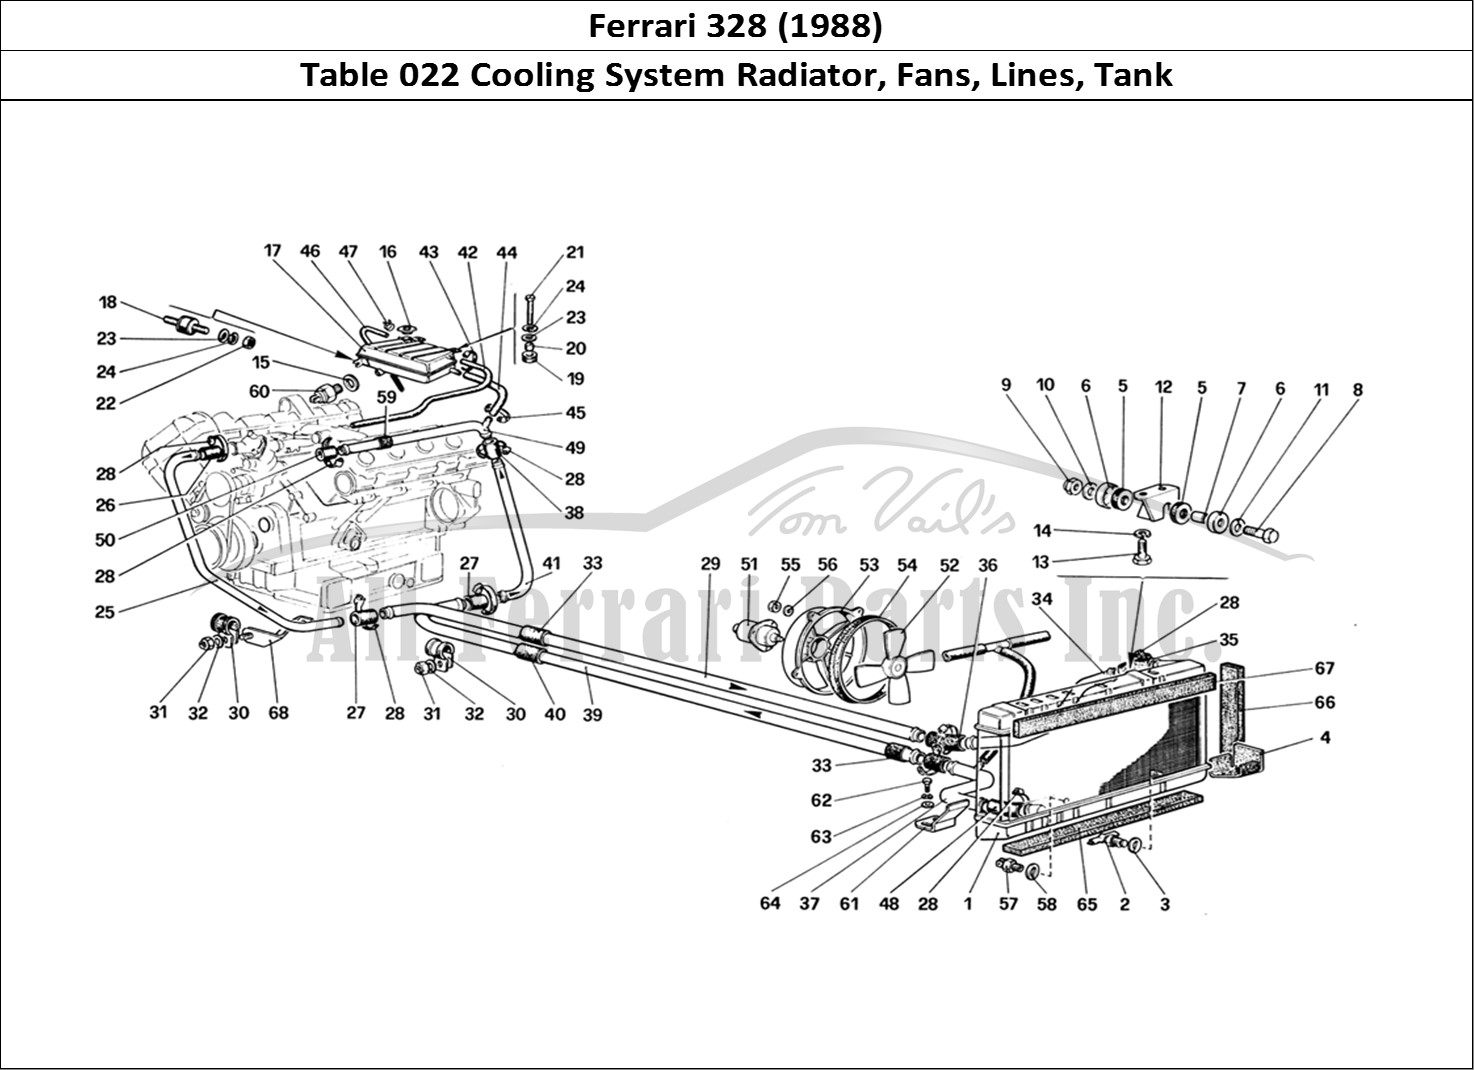 Ferrari Parts Ferrari 328 (1988) Page 022 Cooling System